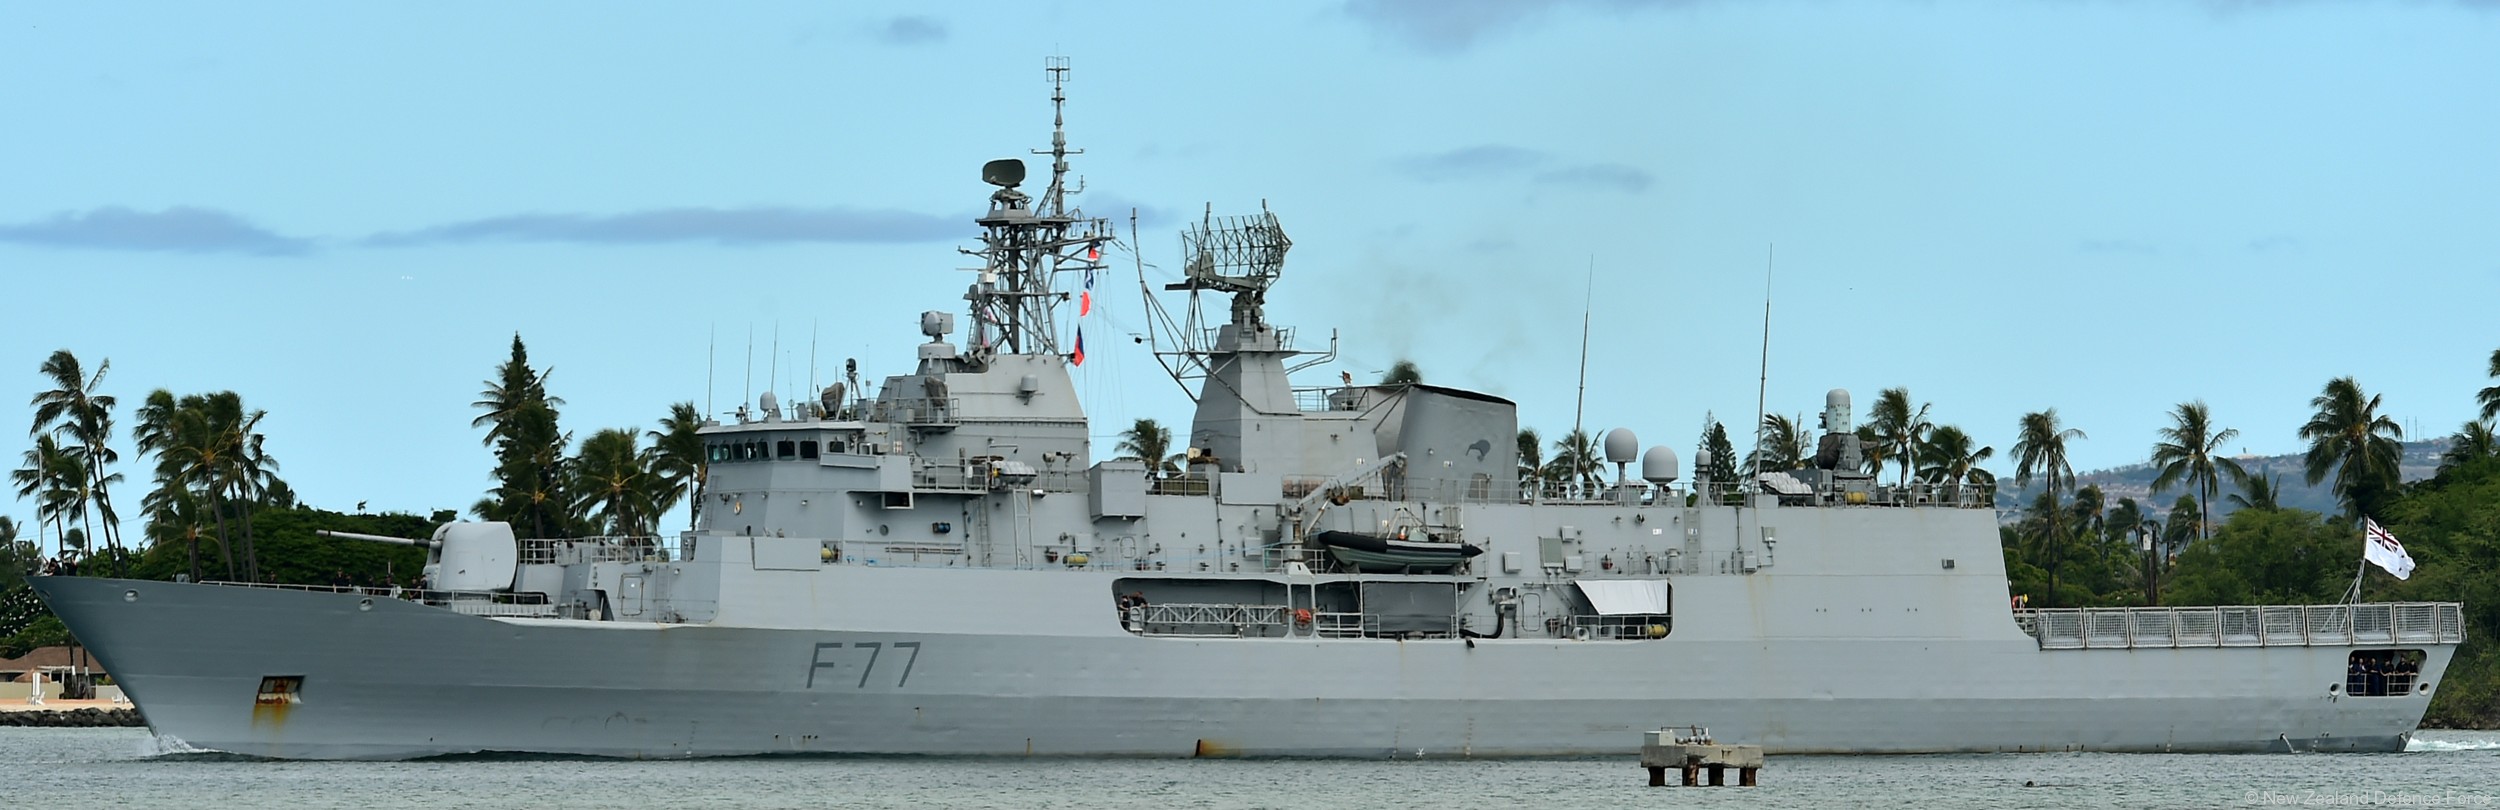 f-77 hmnzs te kaha anzac class frigate royal new zealand navy 29